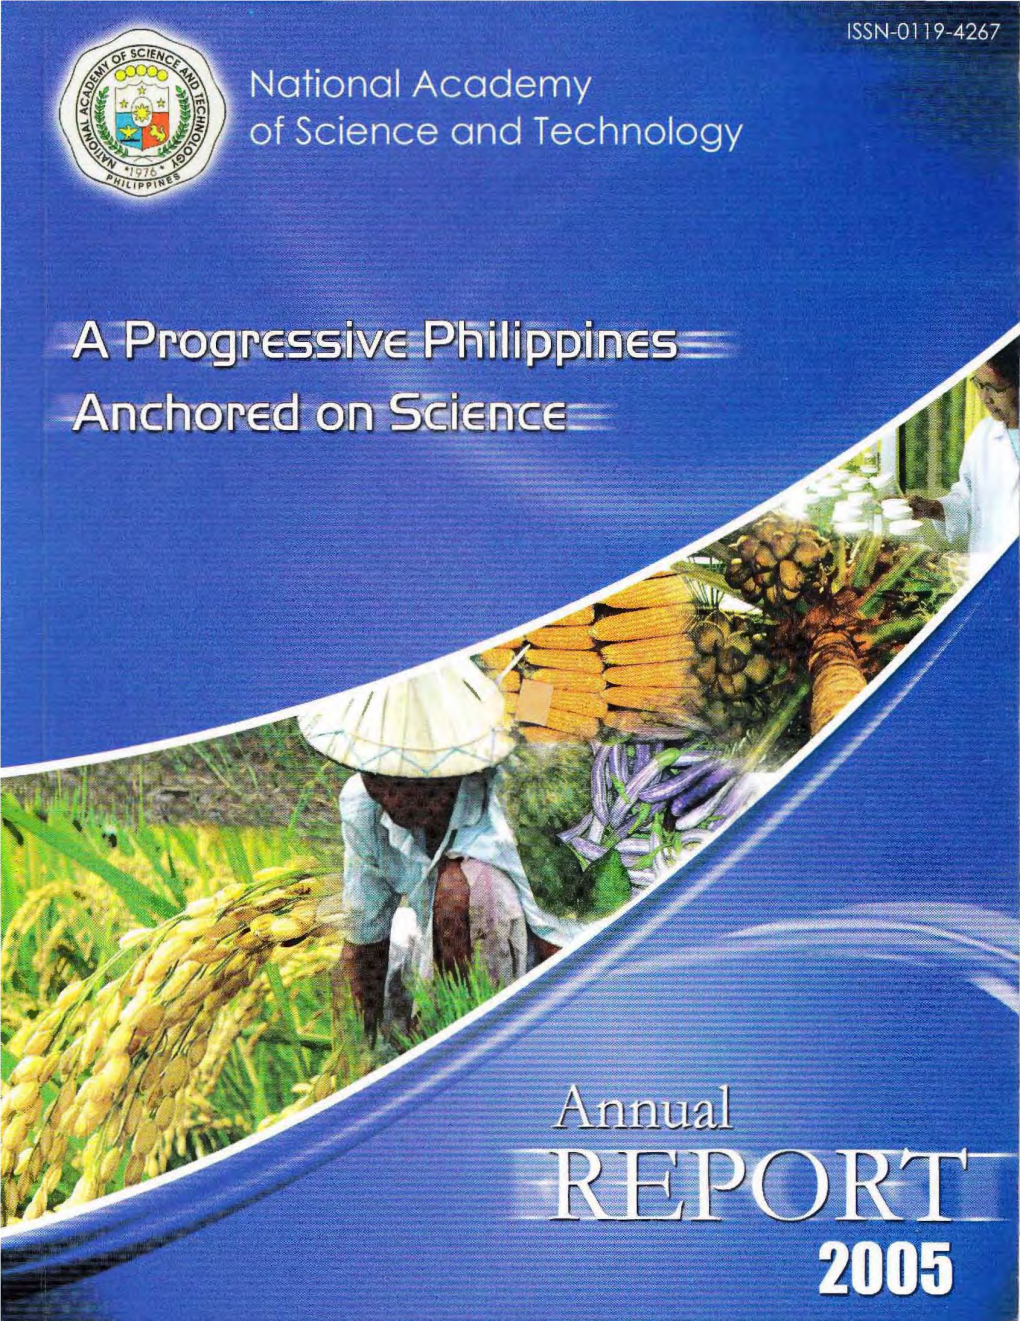 NAST 2005 Annual Report